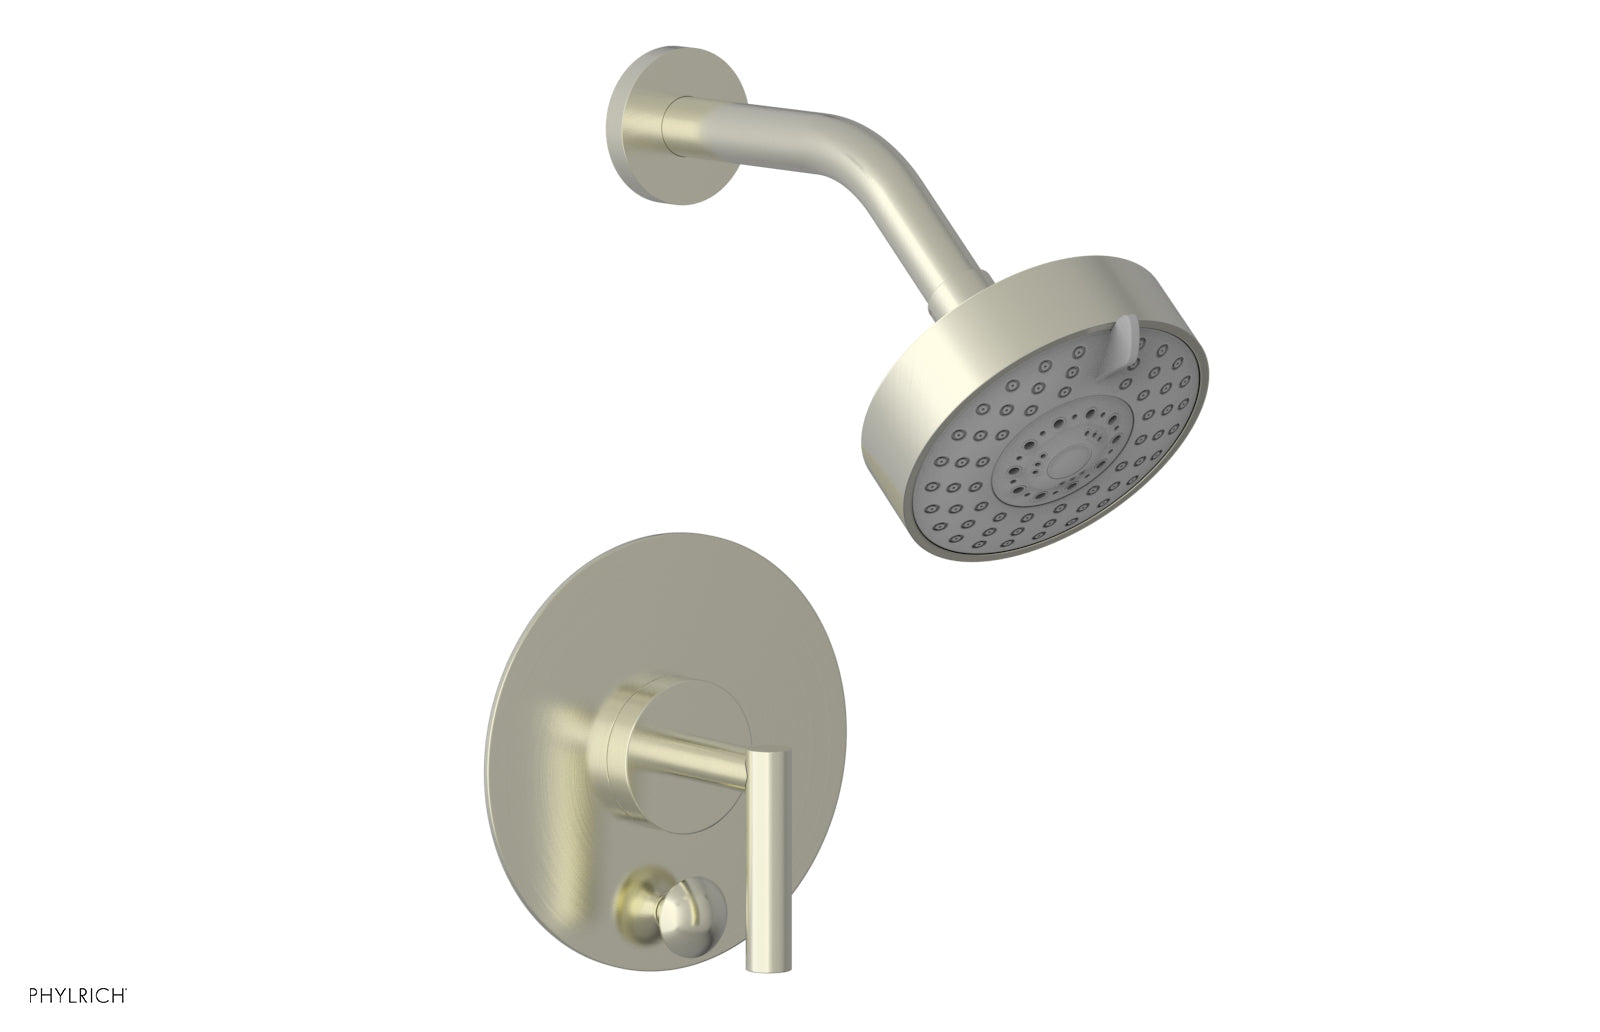 Phylrich TRANSITION Pressure Balance Shower and Diverter Set (Less Spout), Lever Handle